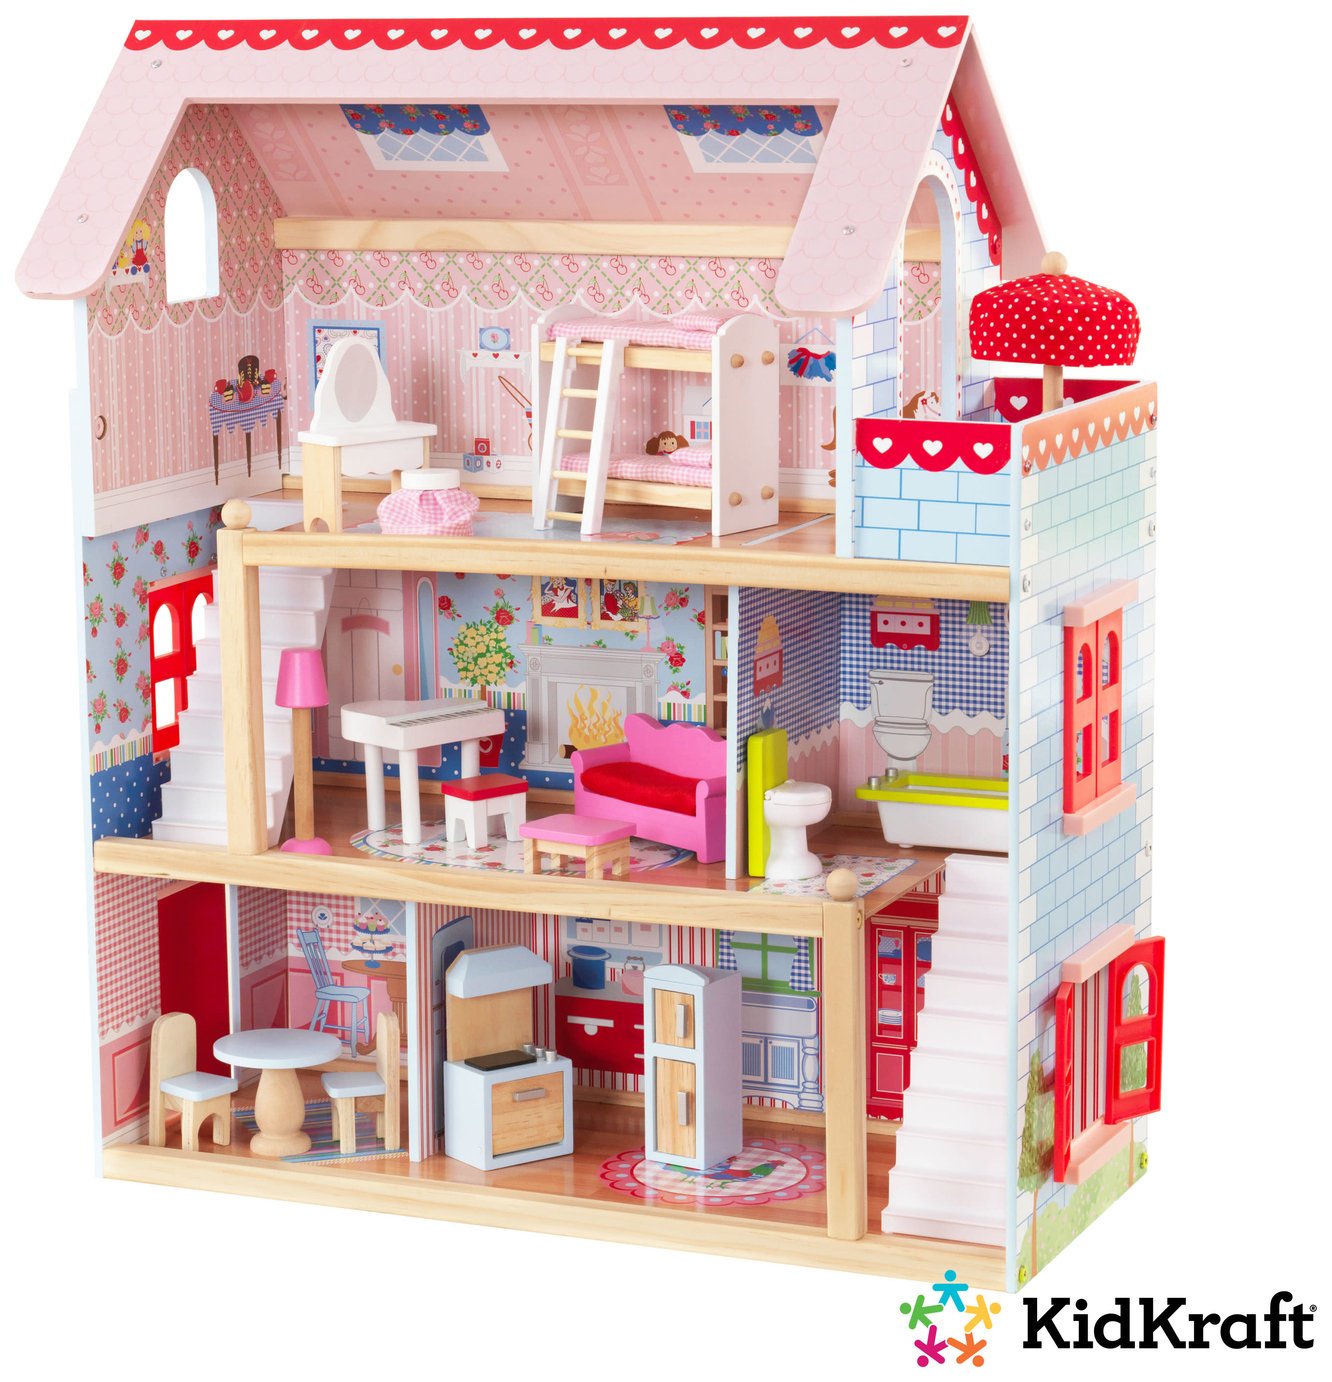 Kidkraft Chelsea Doll Cottage. Review